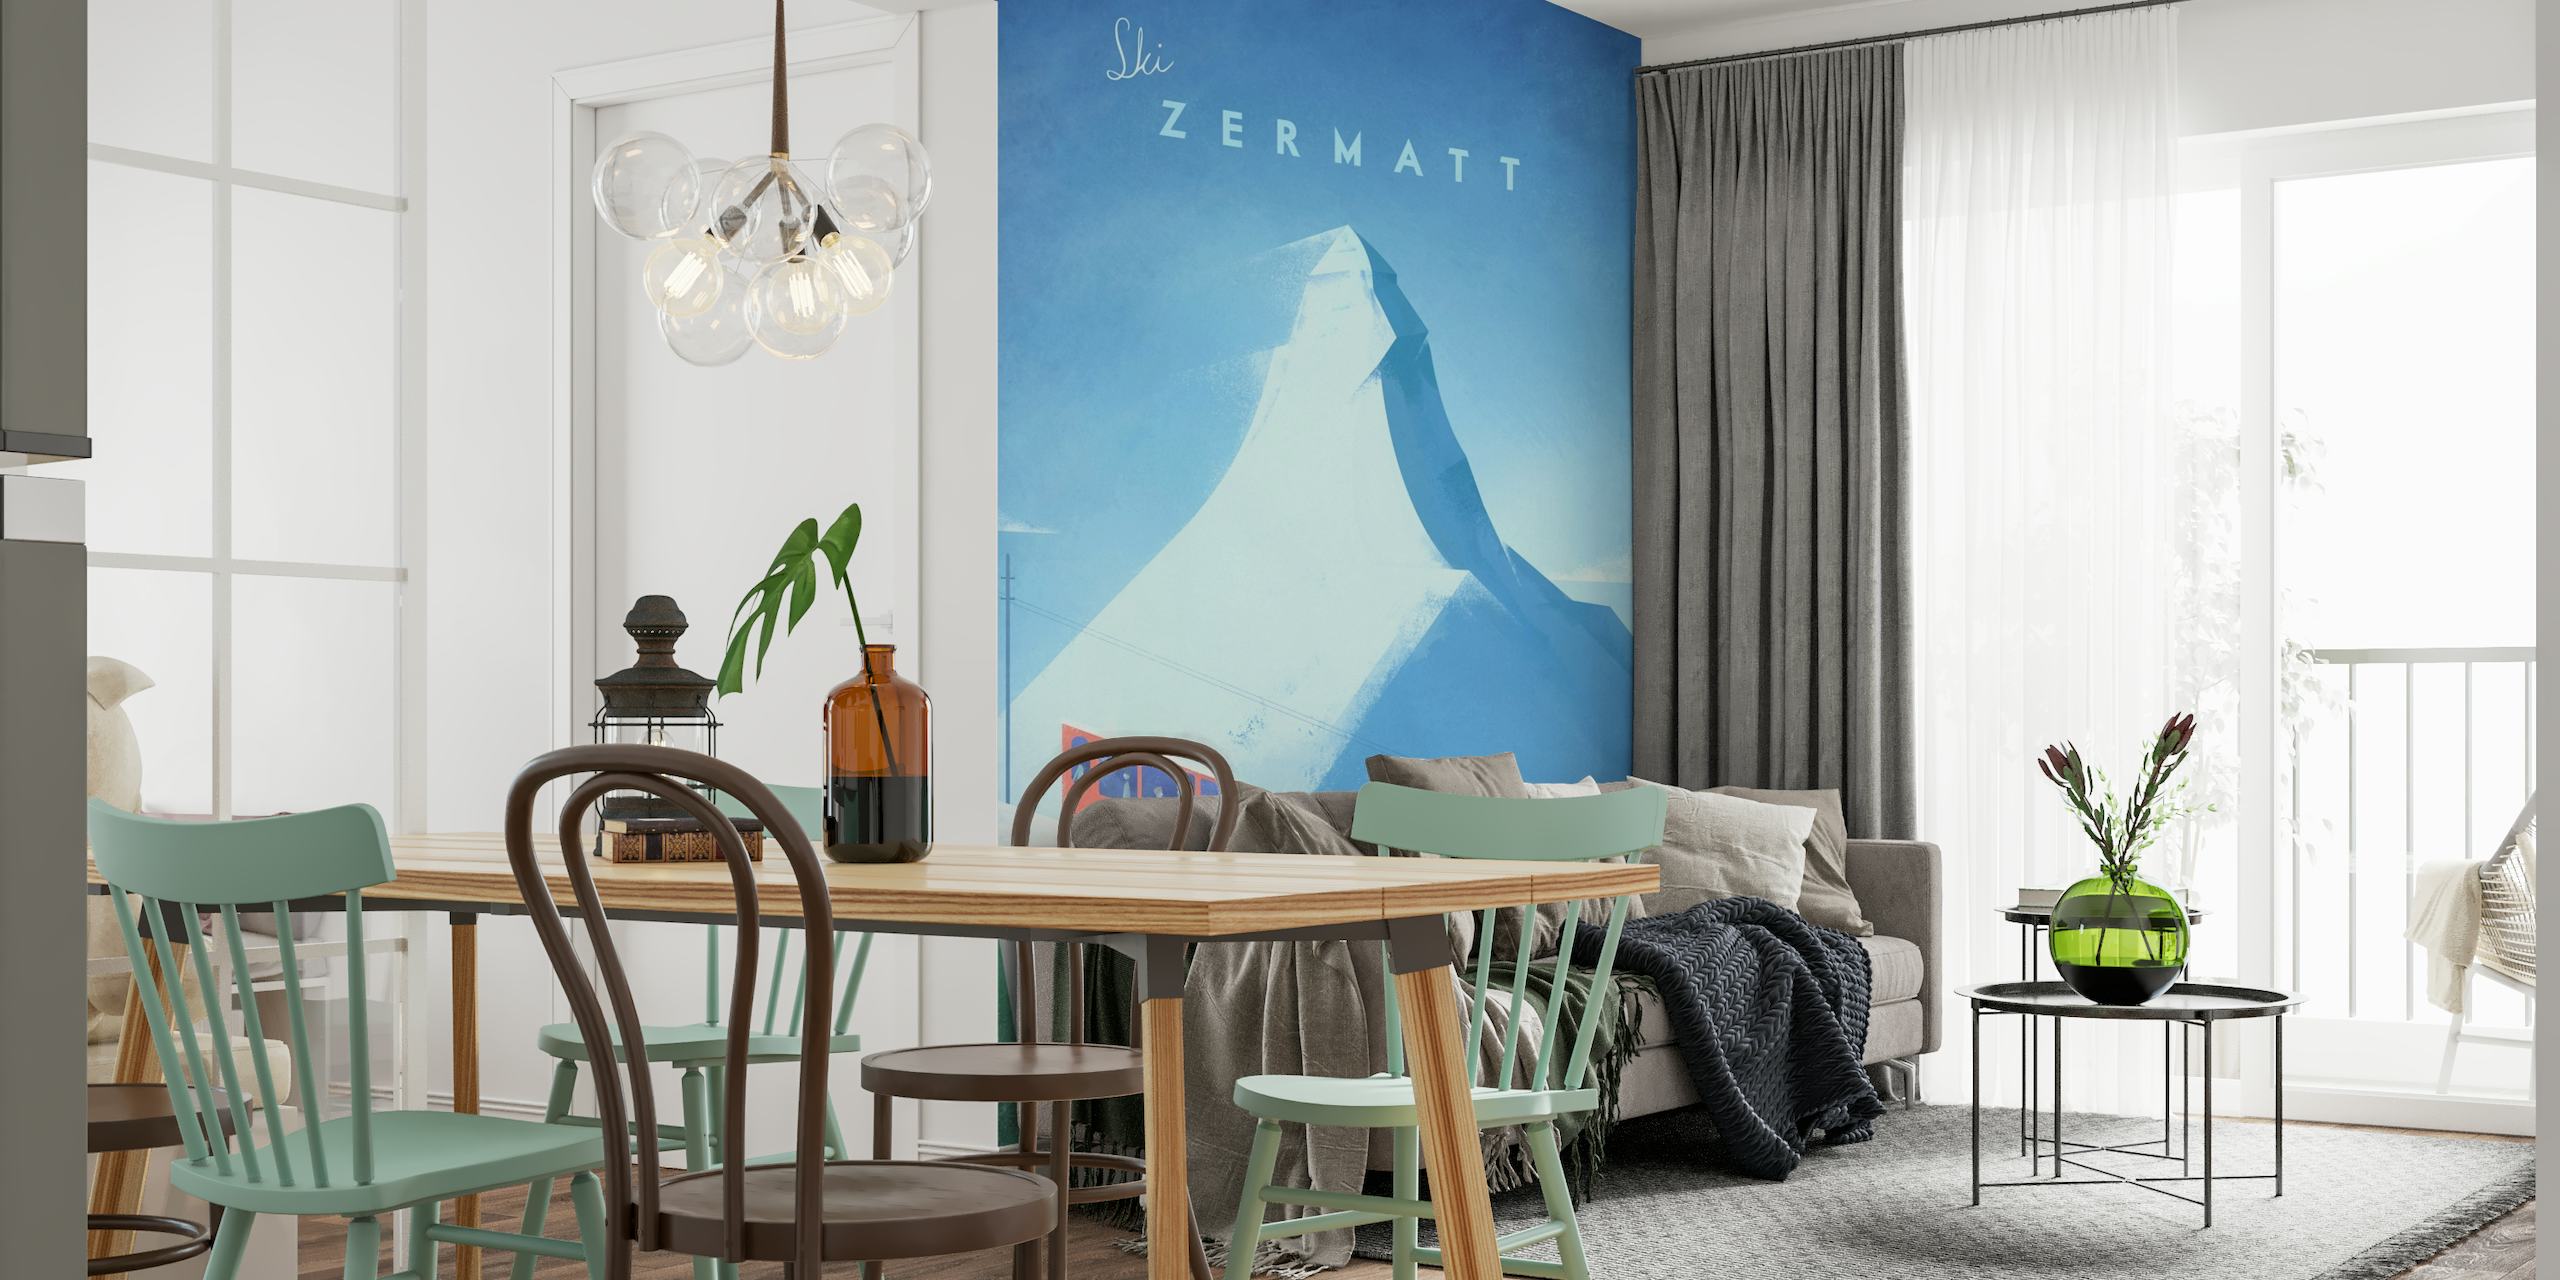 Zermatt Travel Poster papel pintado